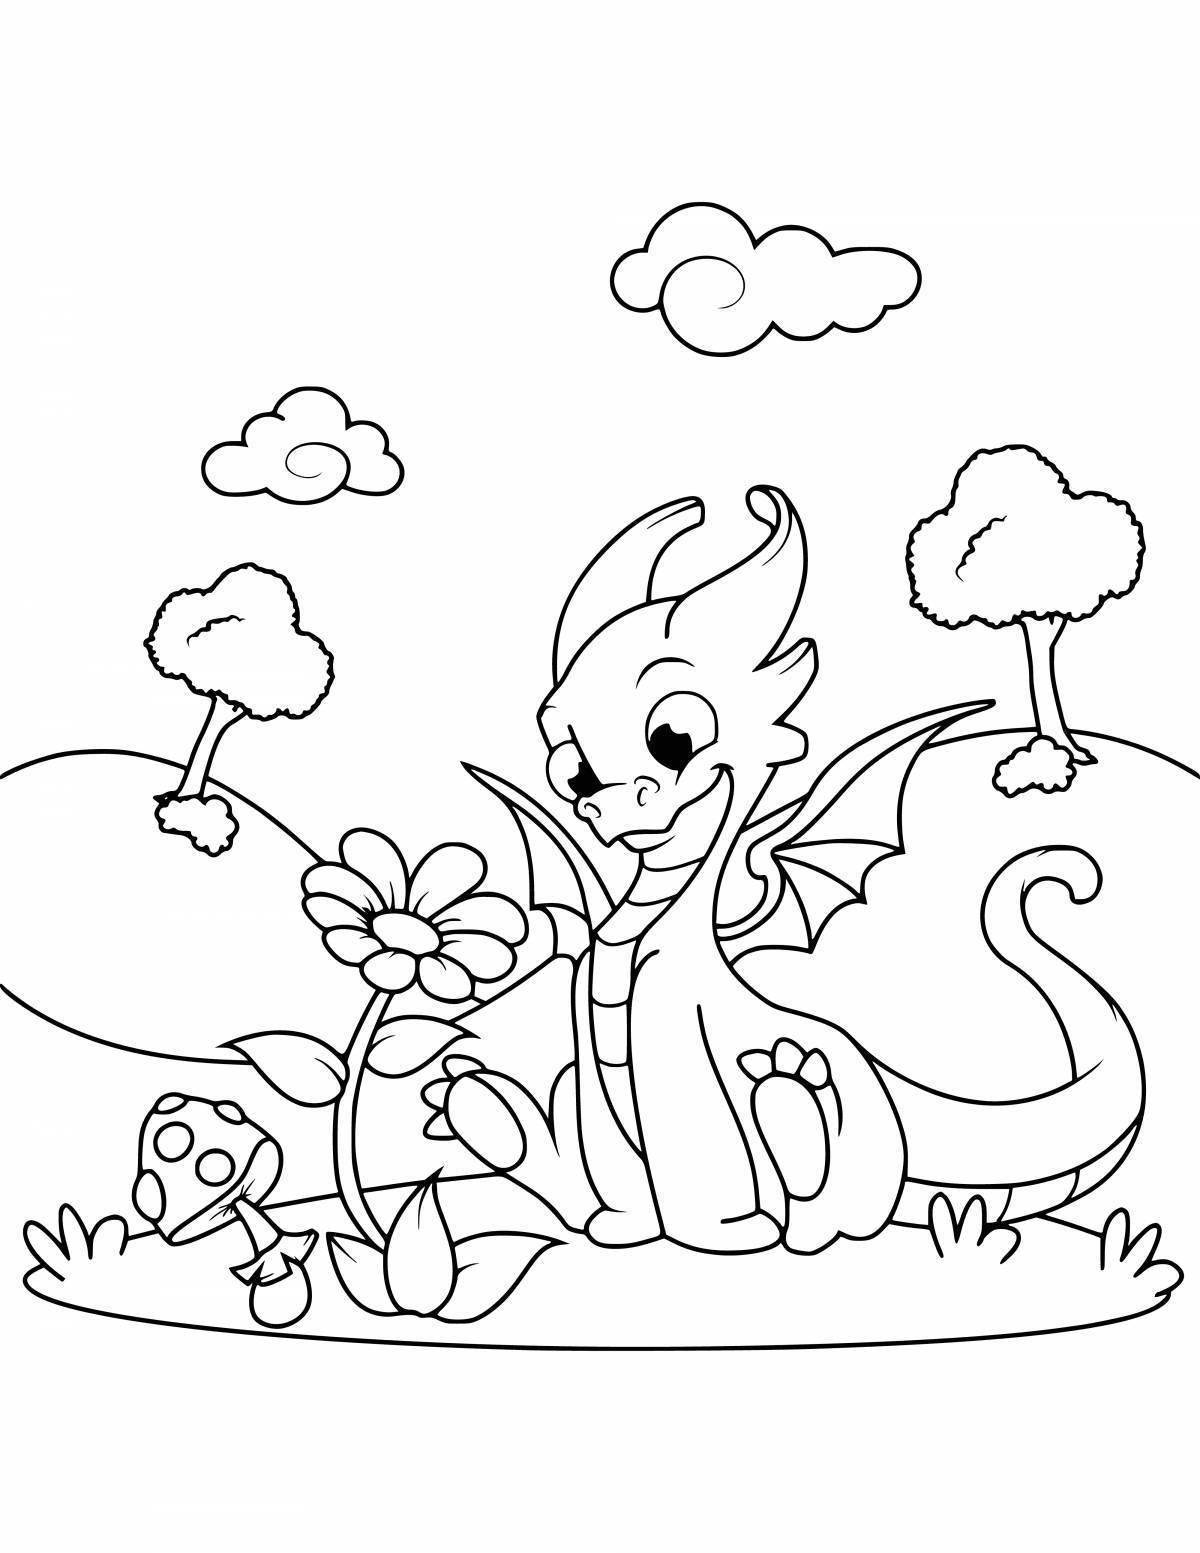 Charming dragon coloring book